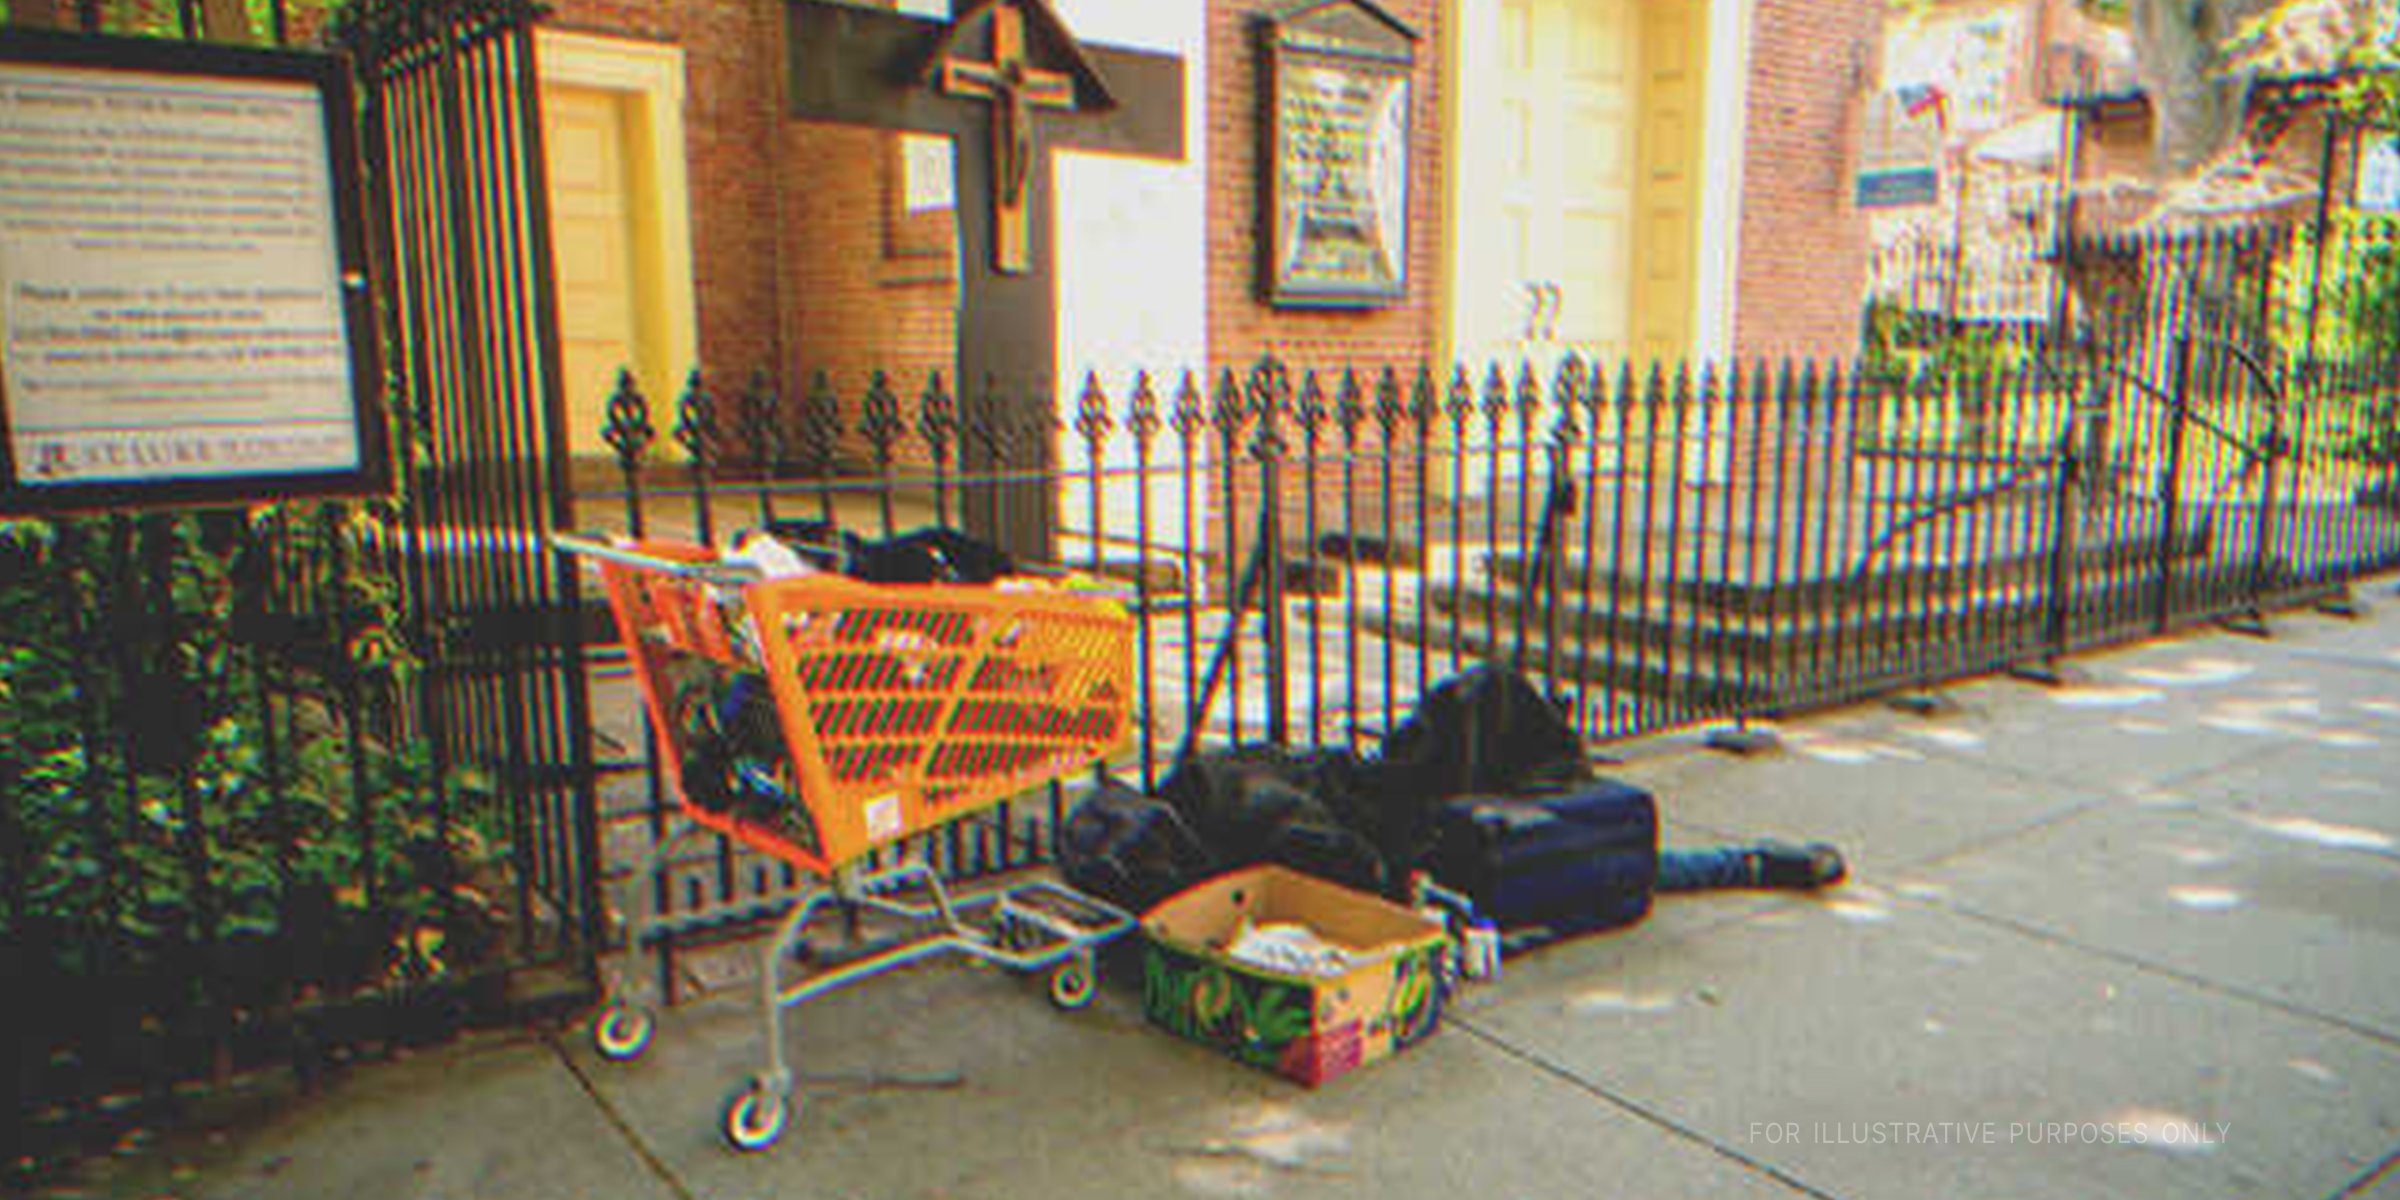 Homeless Man Fainted Outside The Church | Source: Shutterstock